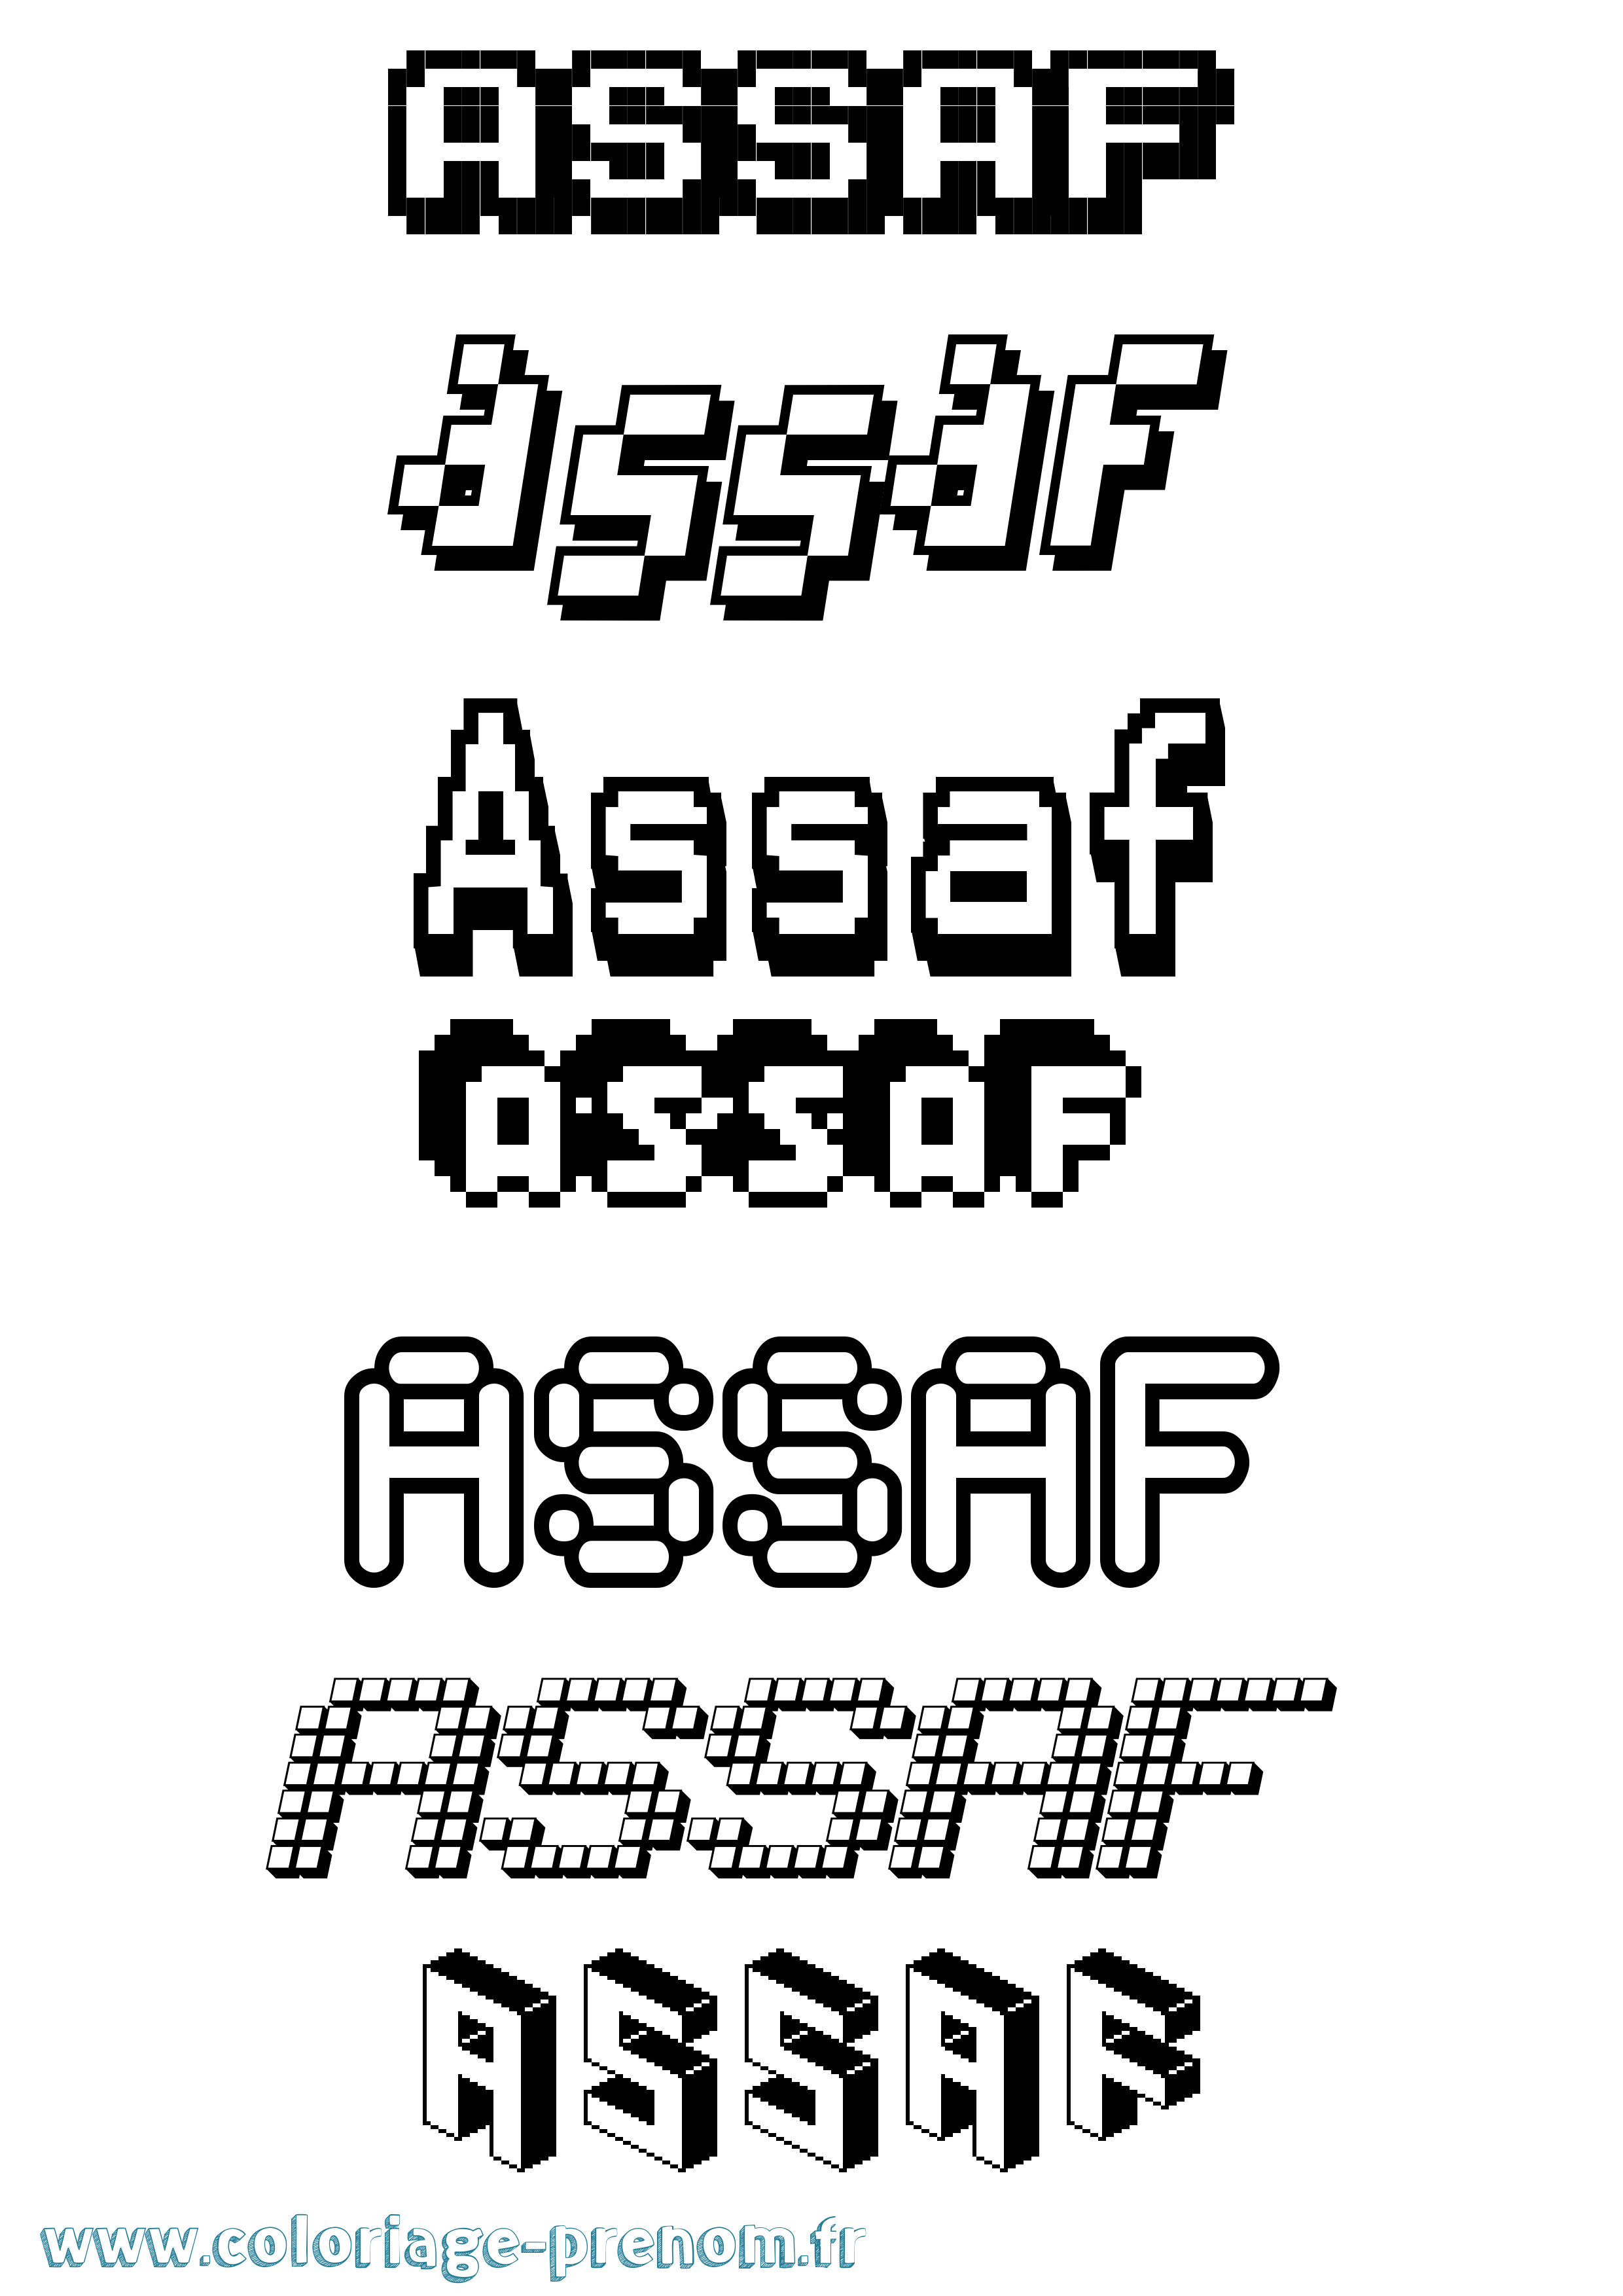 Coloriage prénom Assaf Pixel